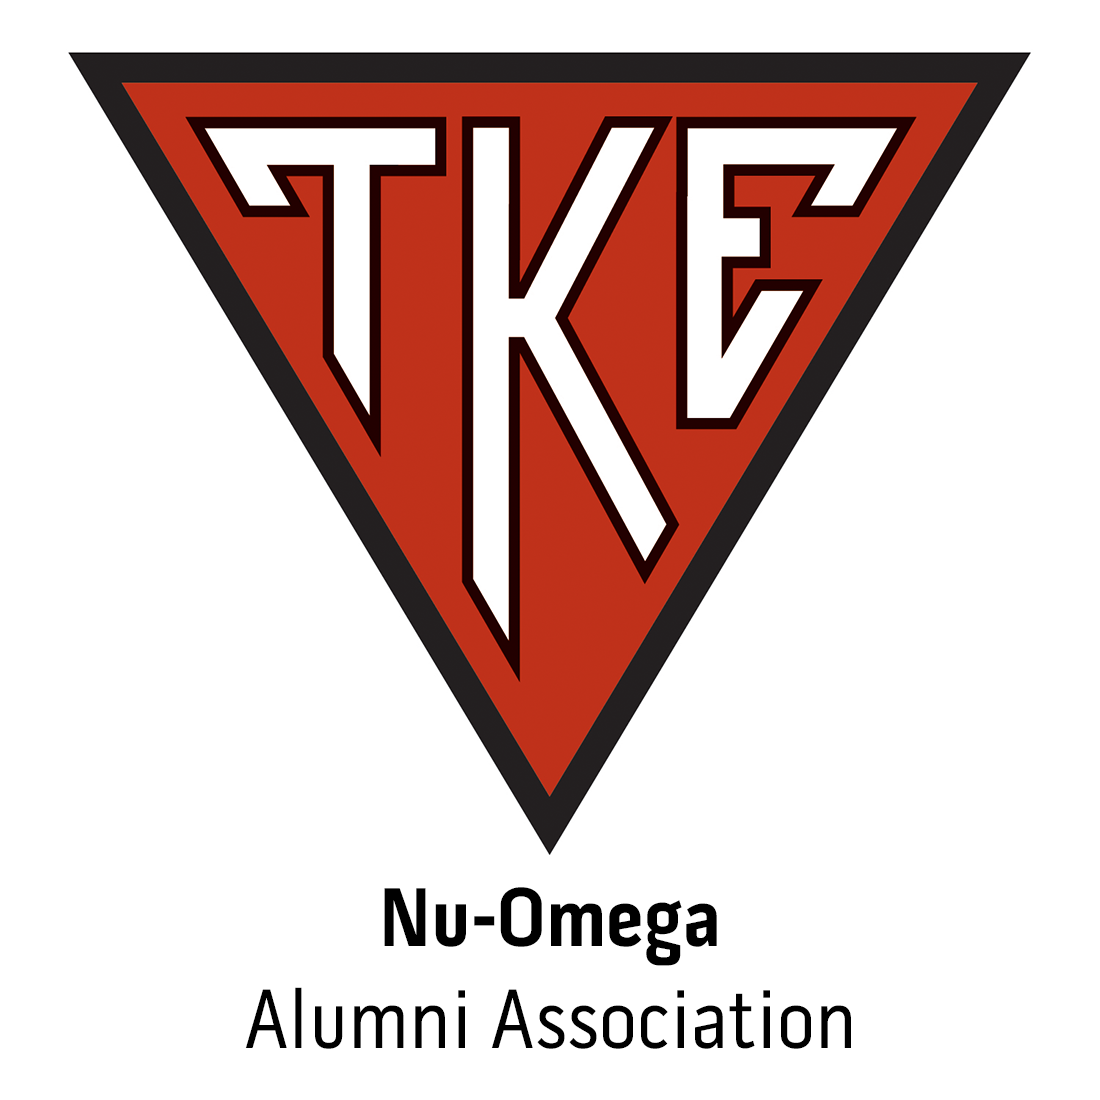 Nu-Omega Alumni Association at William Paterson Univeristy